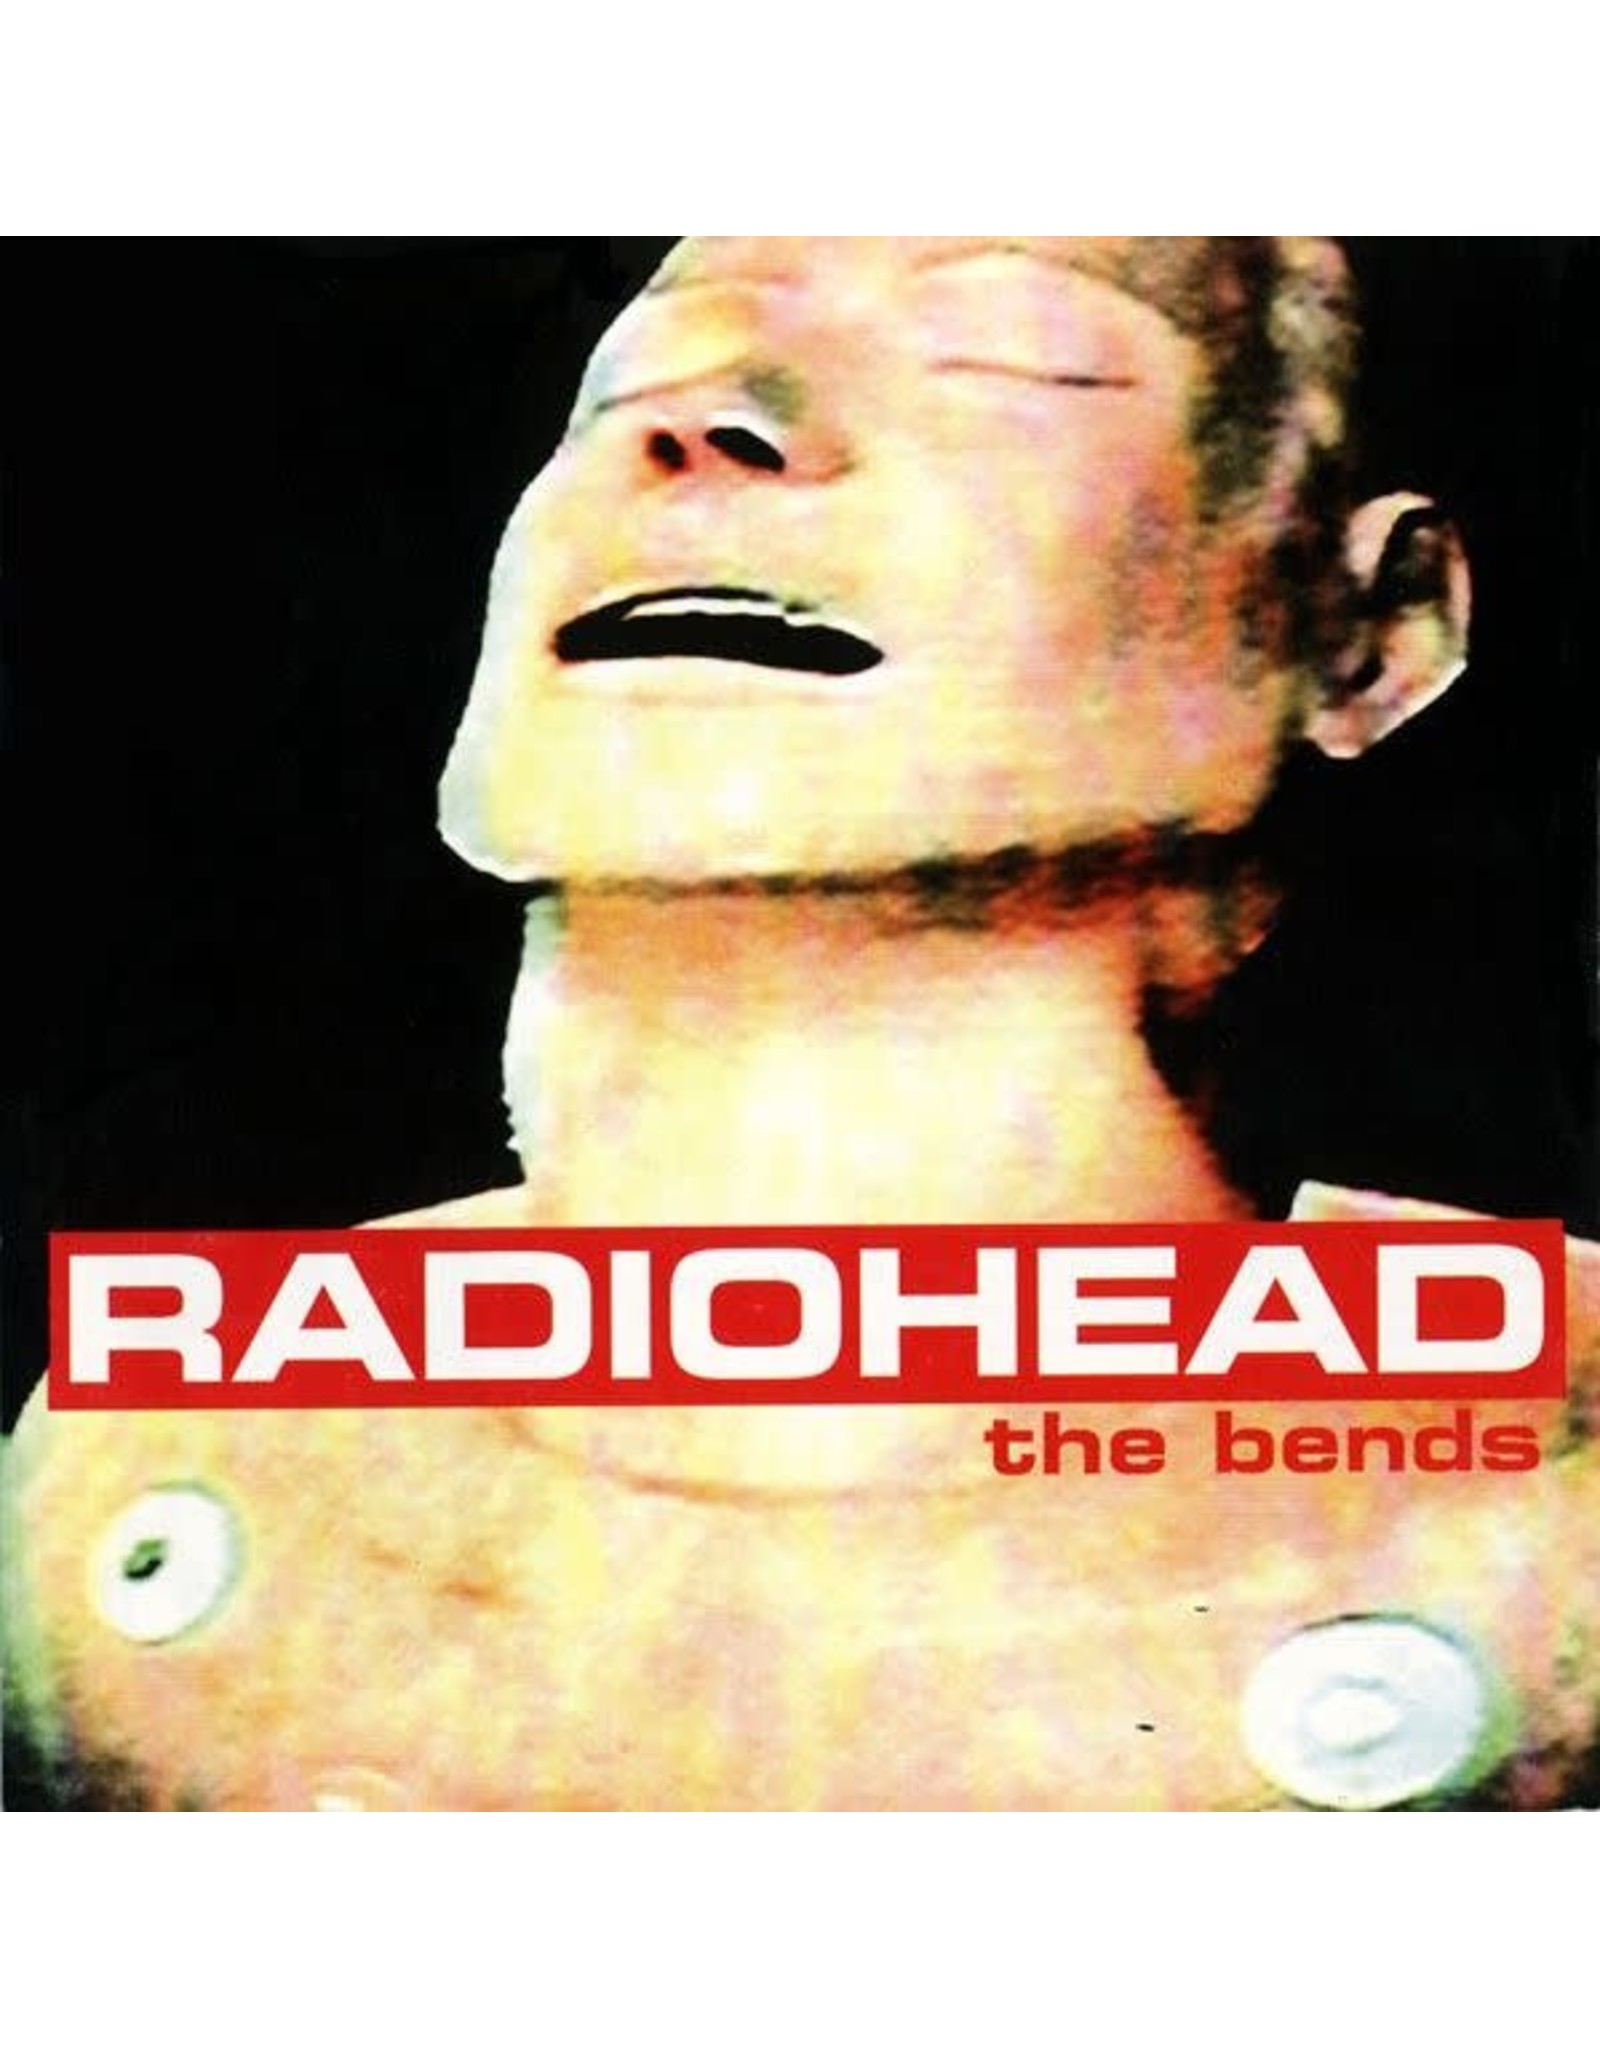 radiohead the bends zip rar free